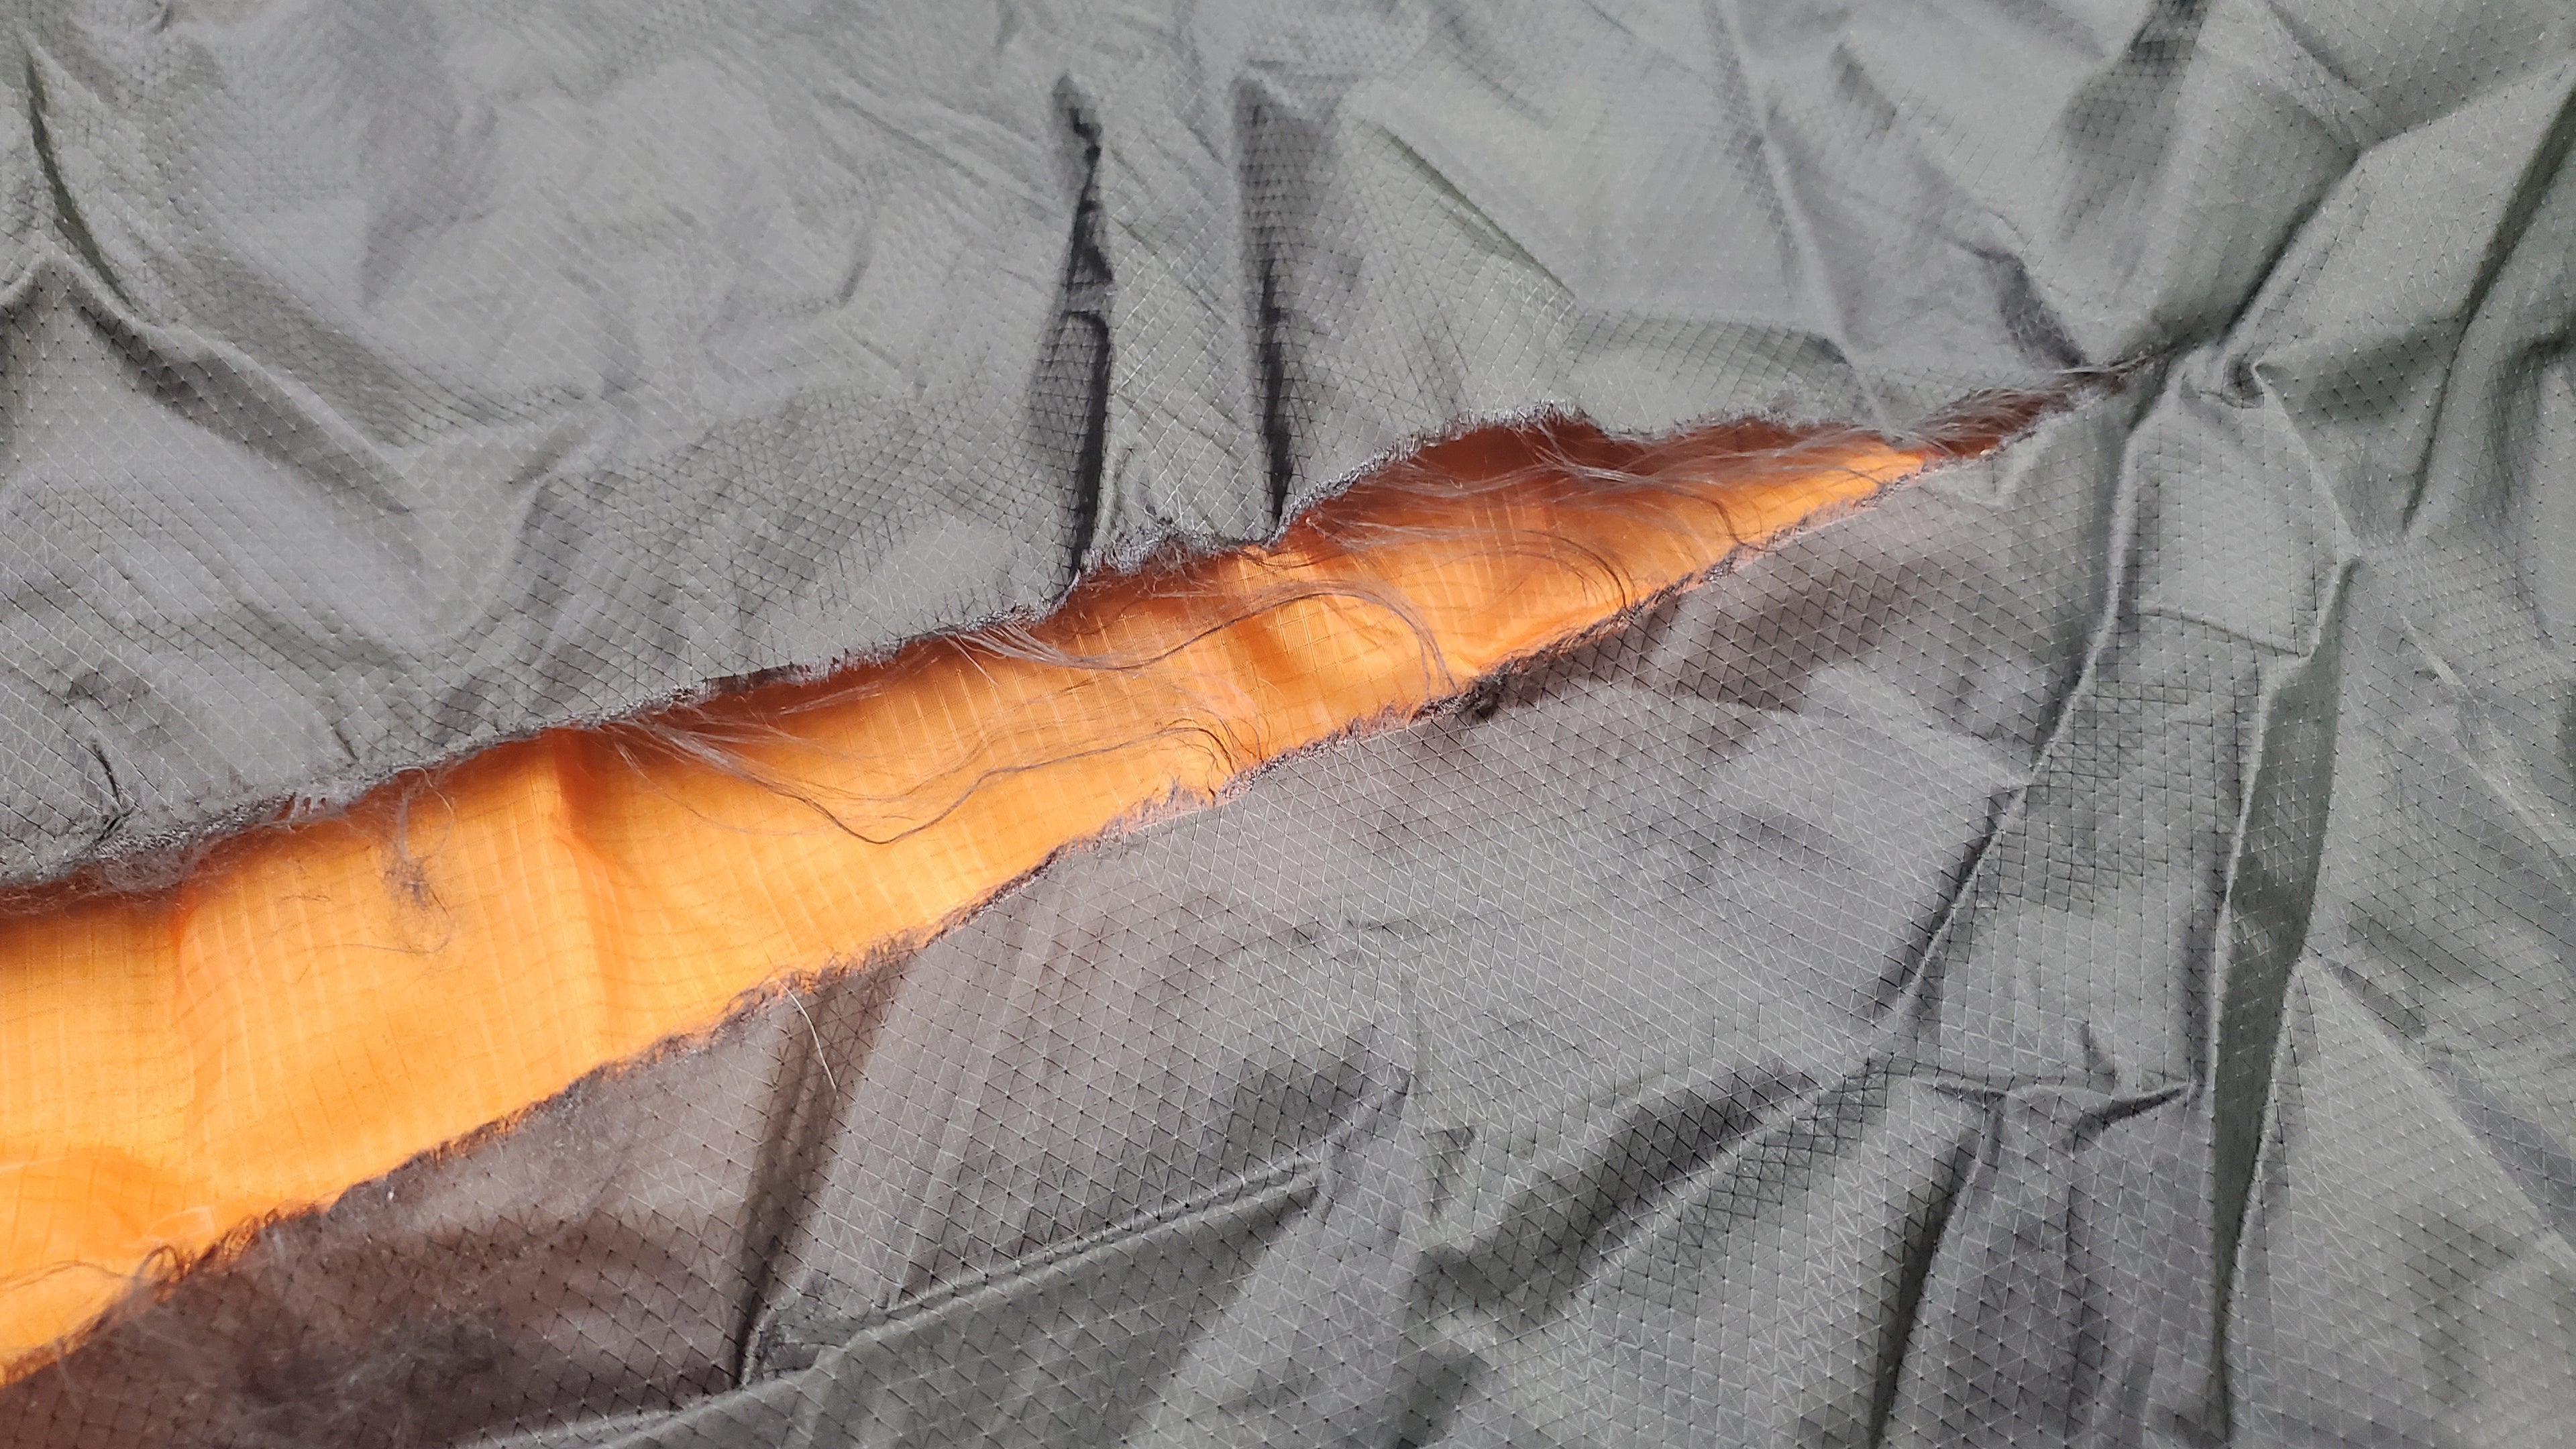 Damaged camping hammock made from ultralight nylon fabrics - 1.2oz ultralight Mtn-XL fabric black, and 1.0oz ultralight monolite mesh in burnt orange